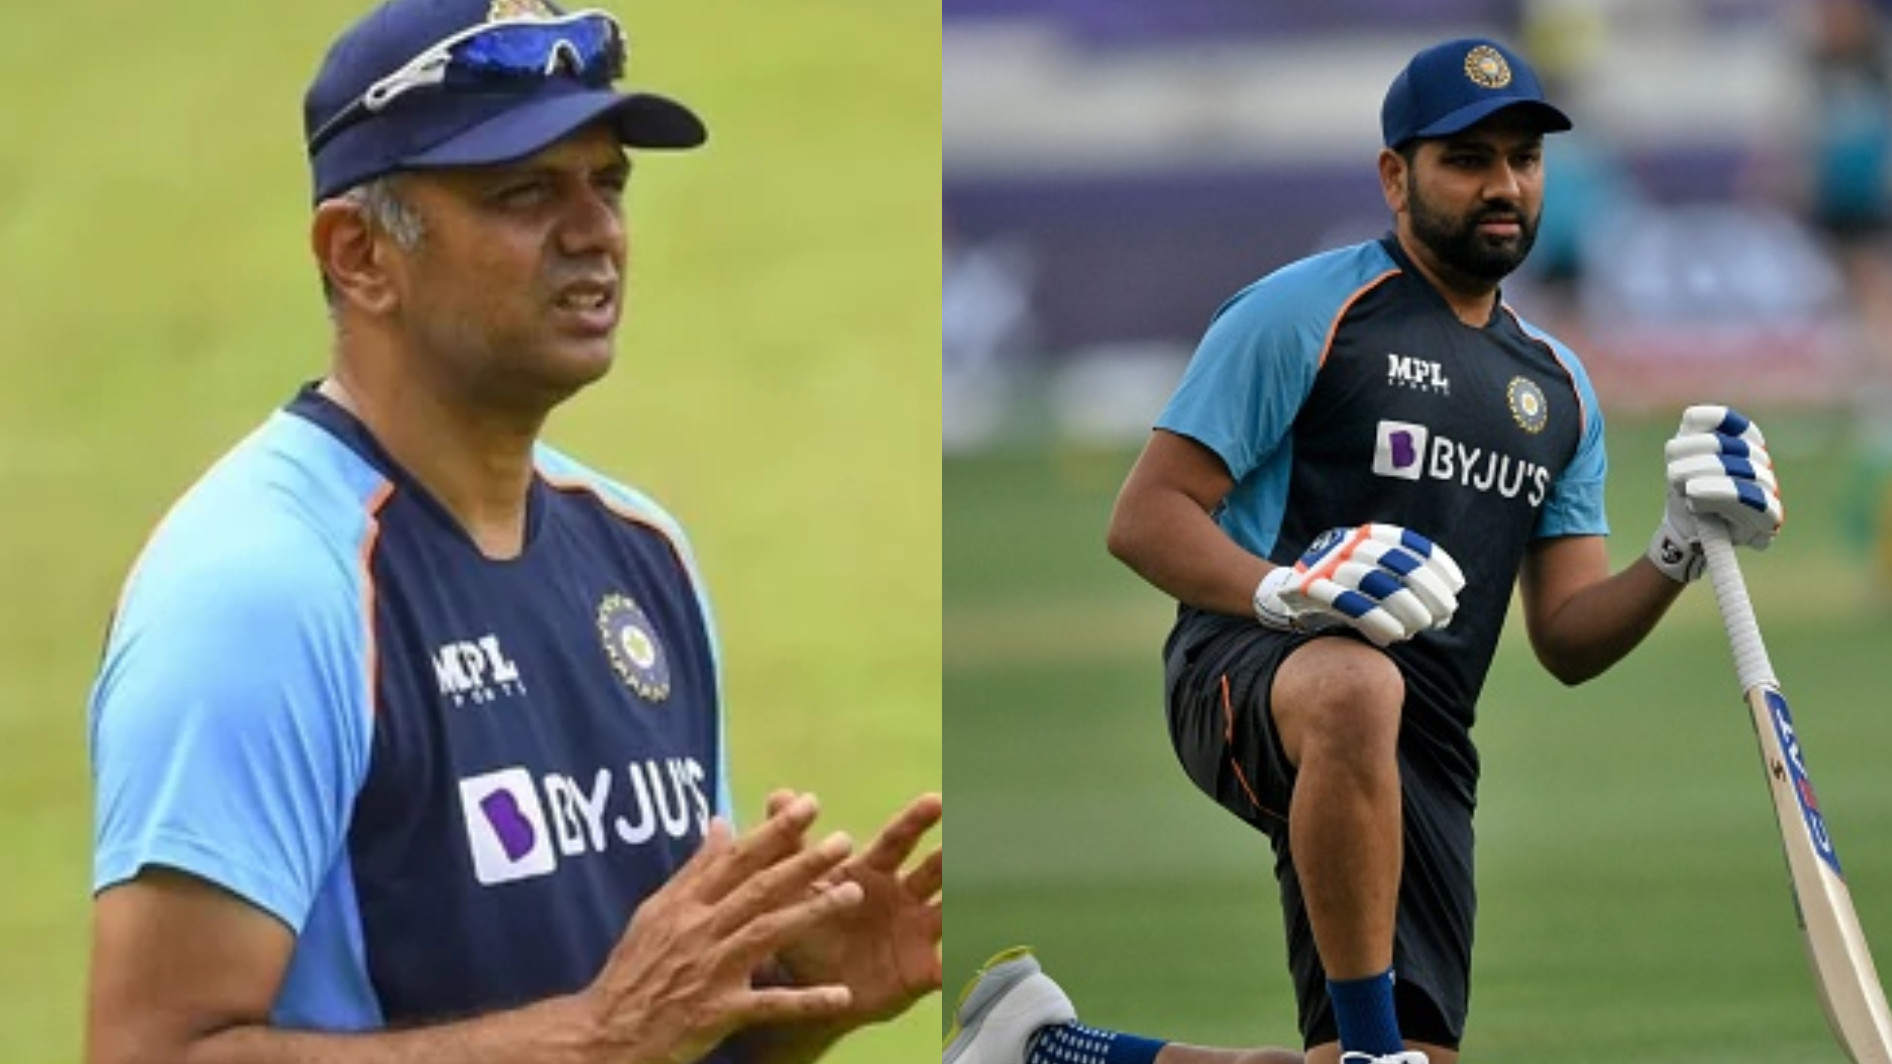 New India head coach Rahul Dravid backs Rohit Sharma as captain in shorter formats- Report